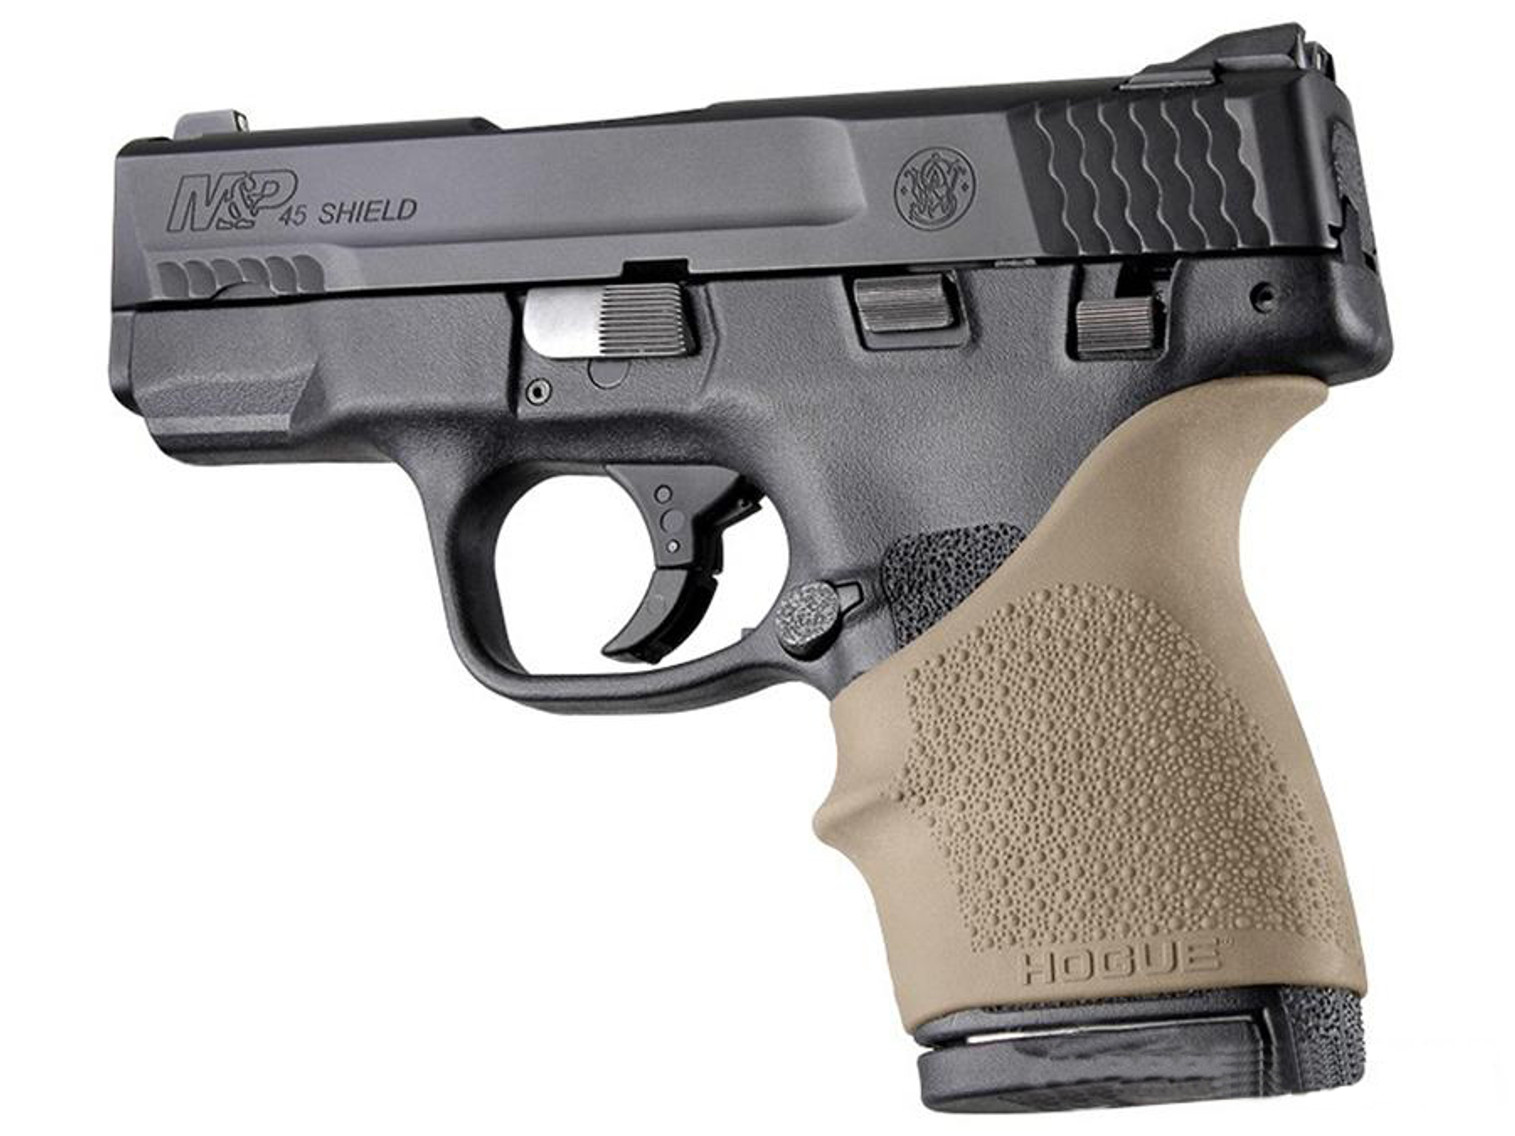 Hogue HandAll Beavertail Handgun Grip Sleeve (Color: Flat Dark Earth/ Model: S&W M&P Shield 45, Kahr P9/P40/CW9/CW40)